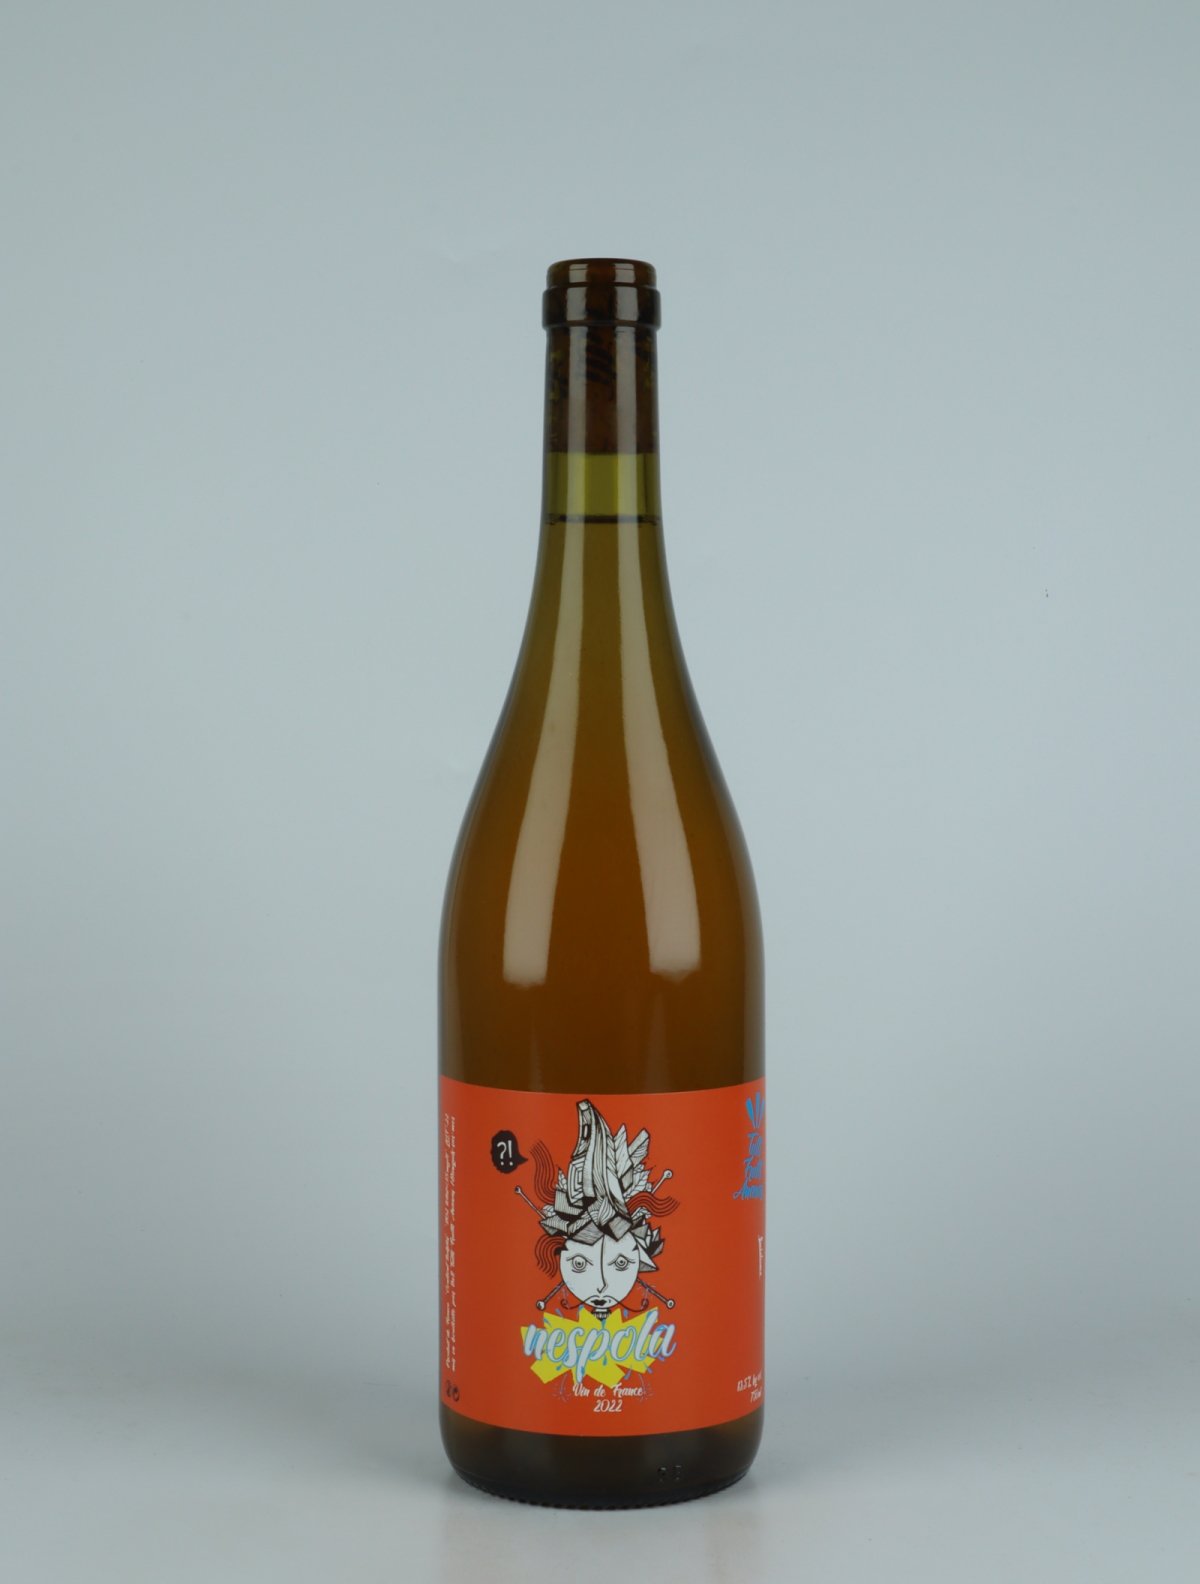 A bottle 2022 Nespola White wine from Tutti Frutti Ananas, Rousillon in France